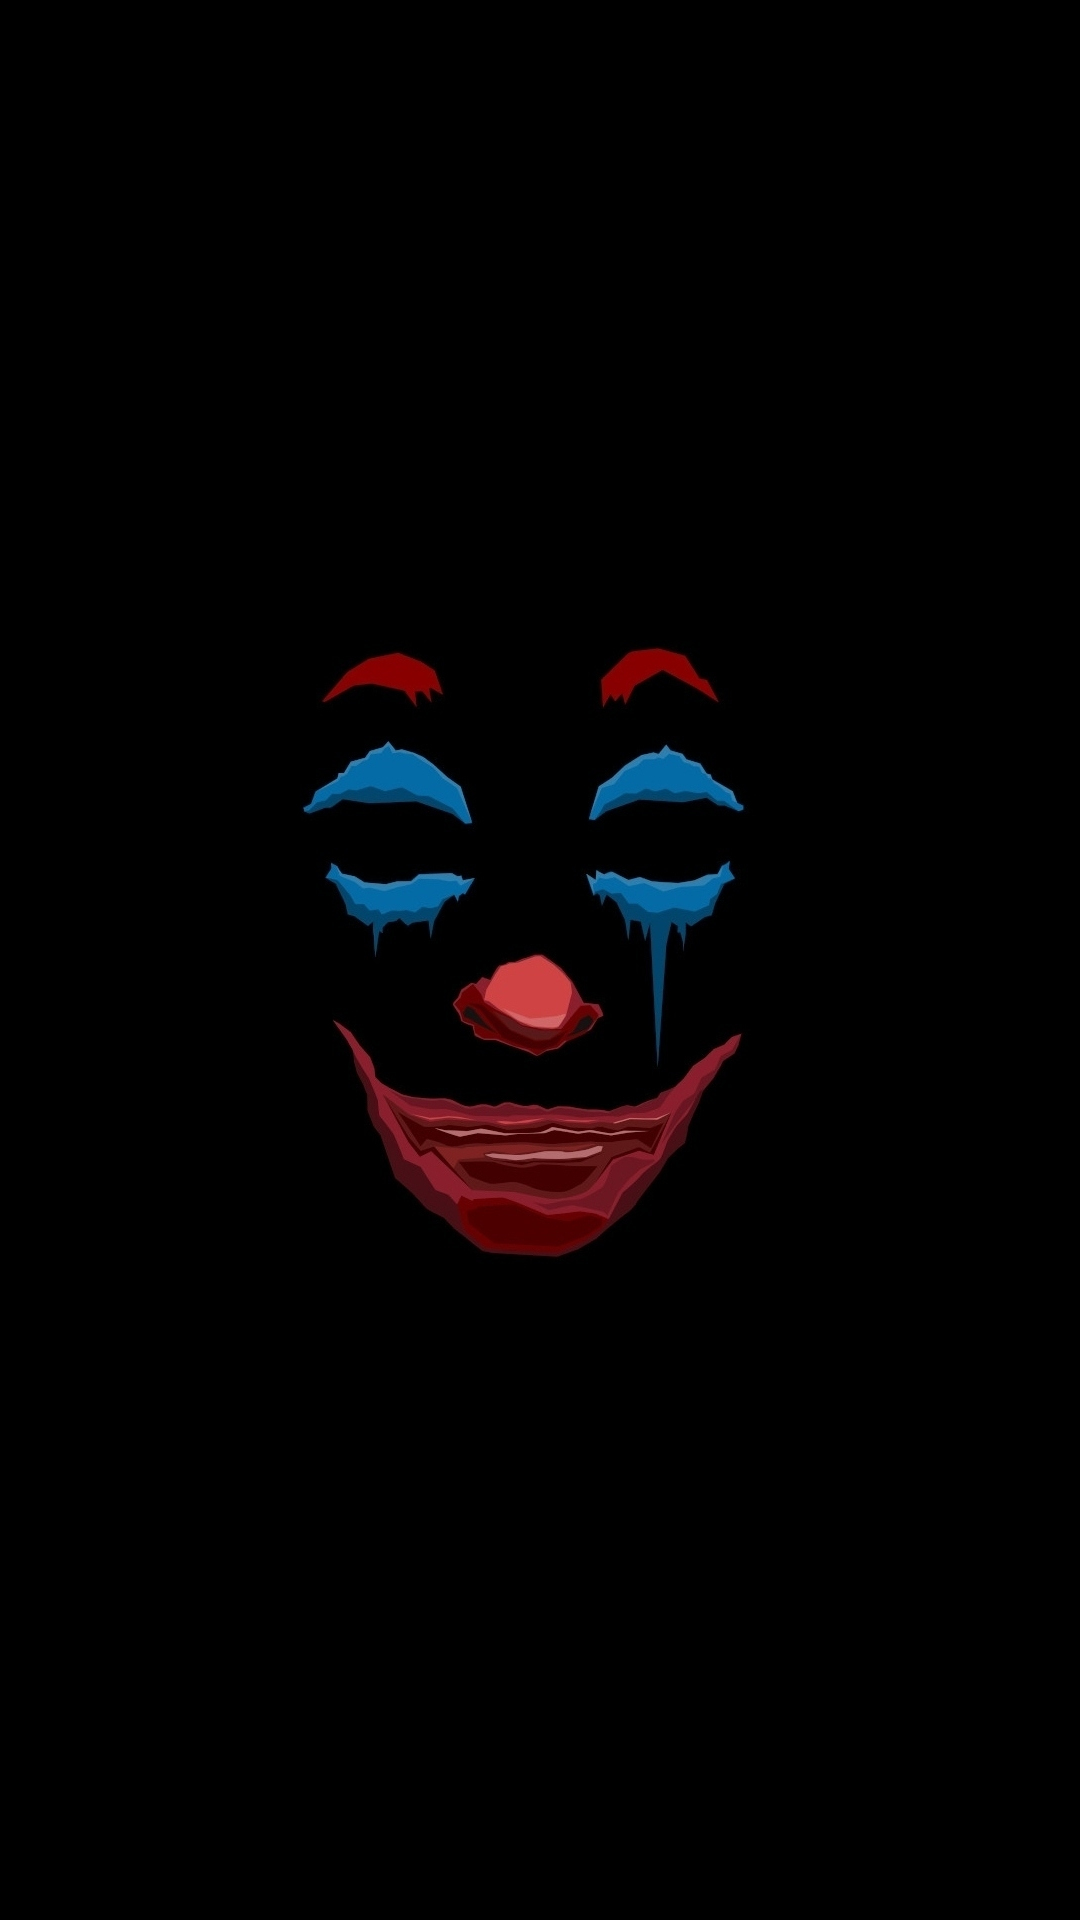 Download 1080x1920 wallpaper  joker  movie face minimalist 